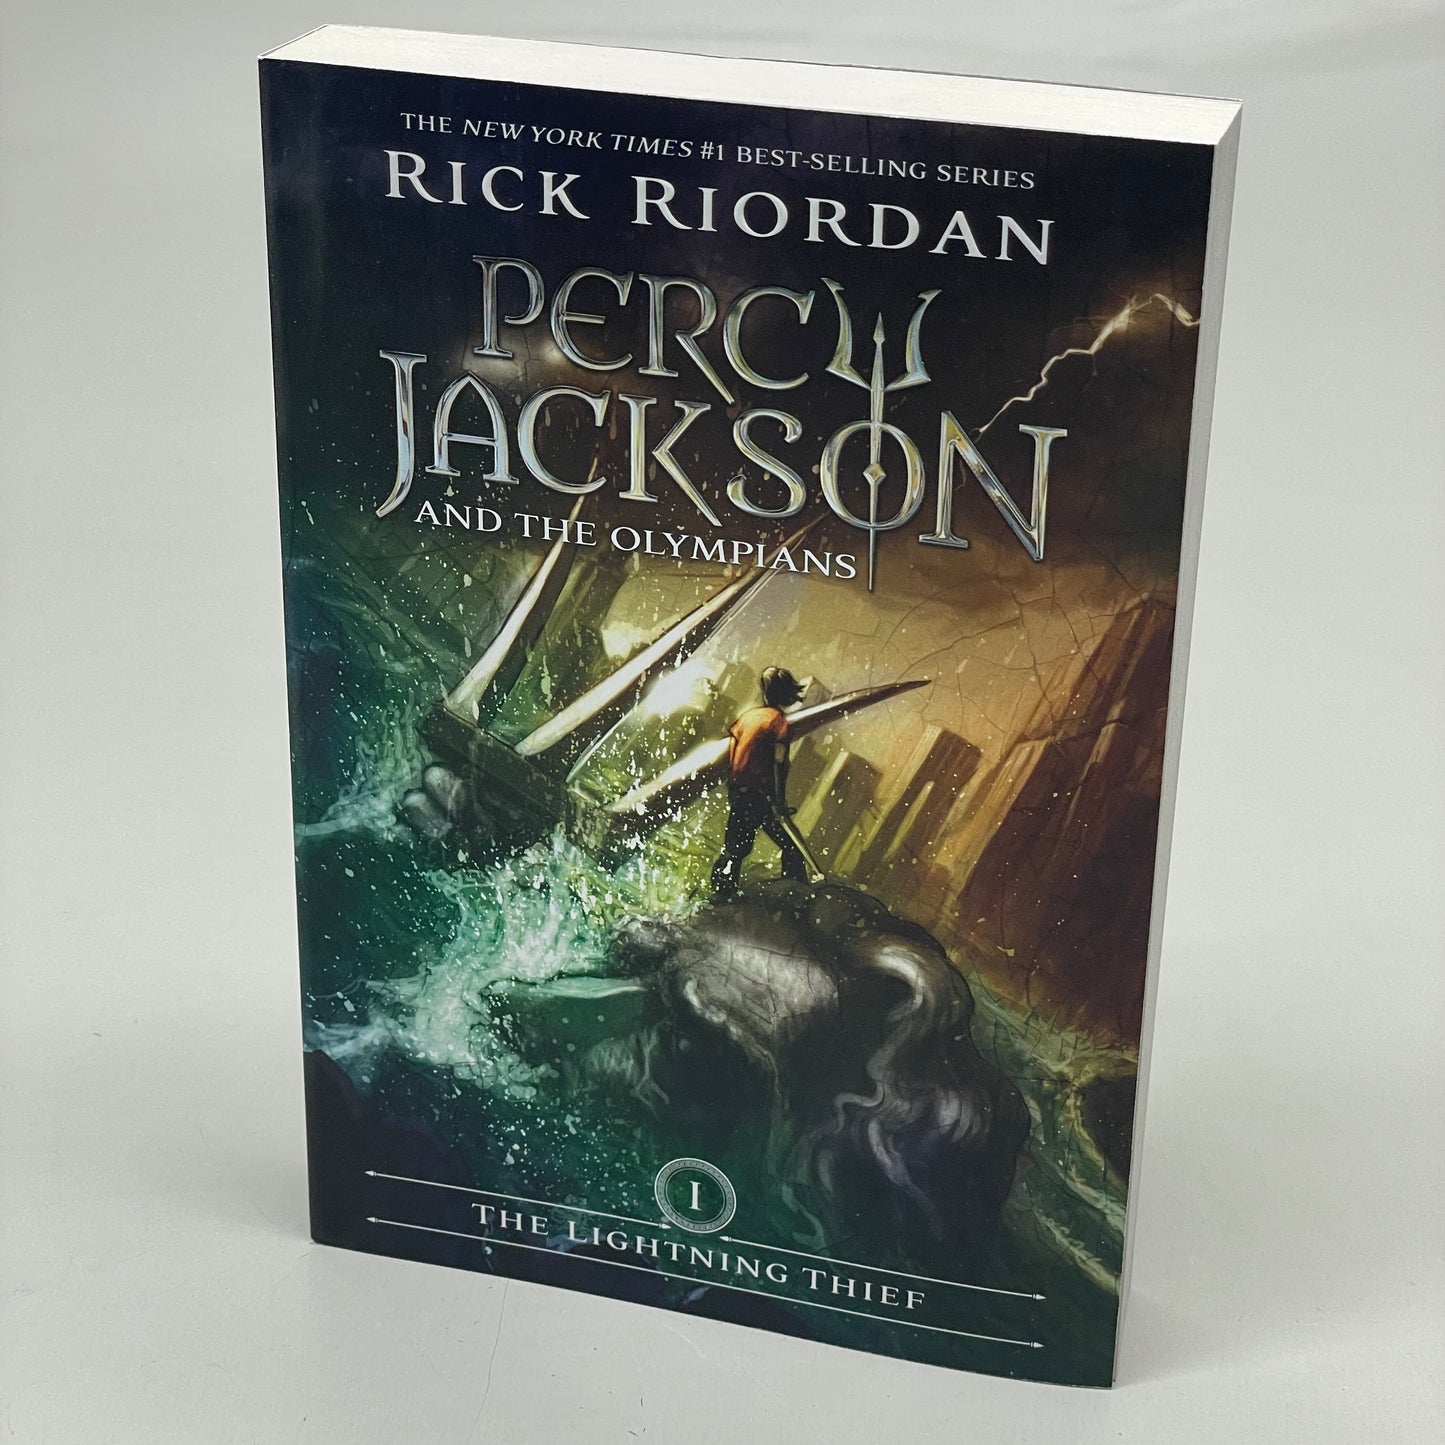 THE LIGHTNING THIEF: Percy Jackson & the Olympians (2 Books) Paperback By Rick Riordan